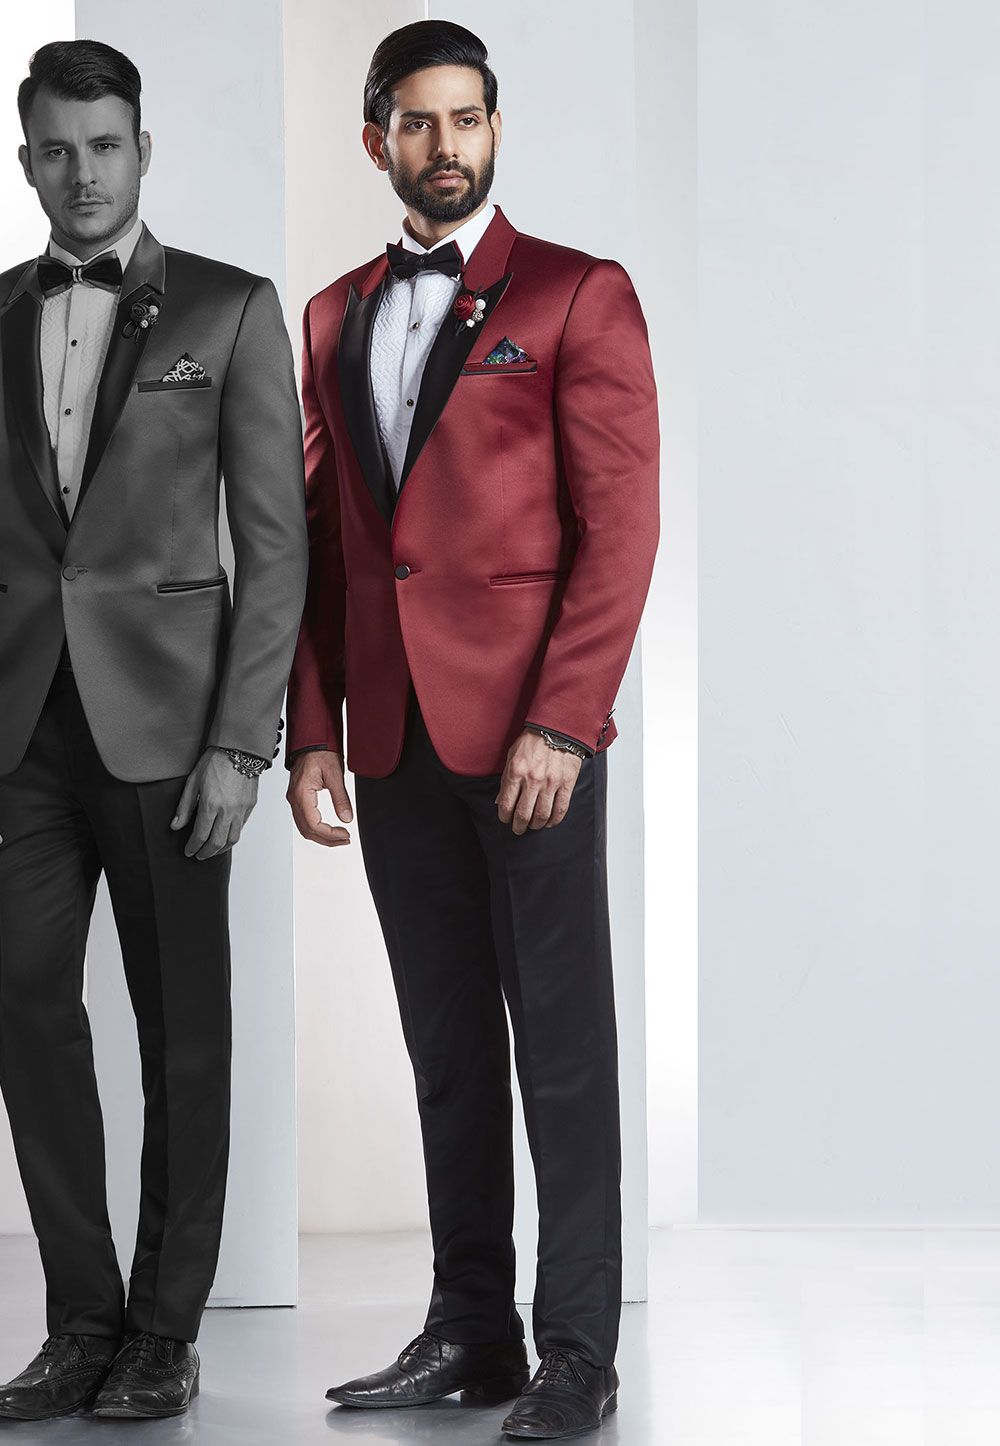 Discover 231+ mens wedding suit colors latest